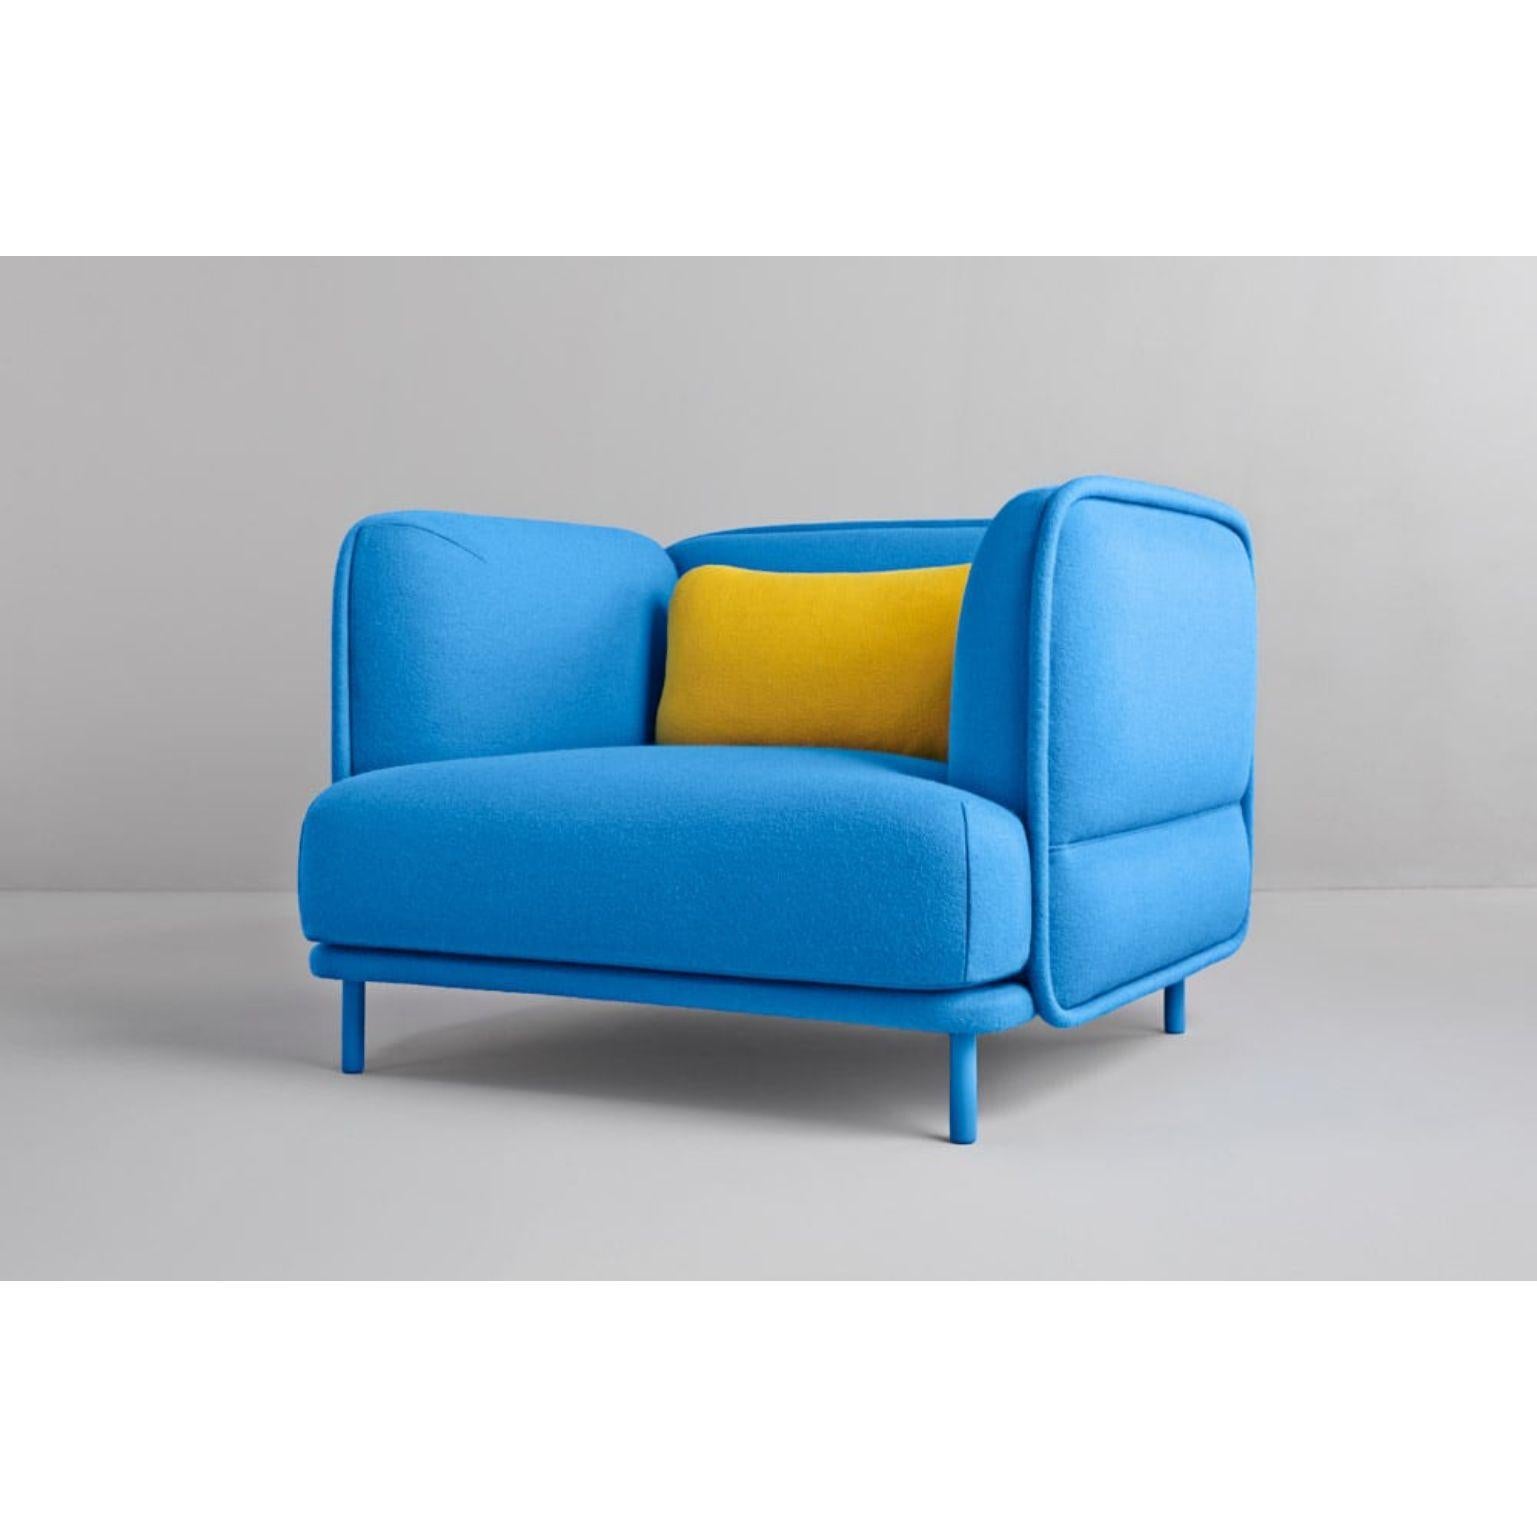 Post-Modern Hug Armchair, Blue by Cristian Reyes